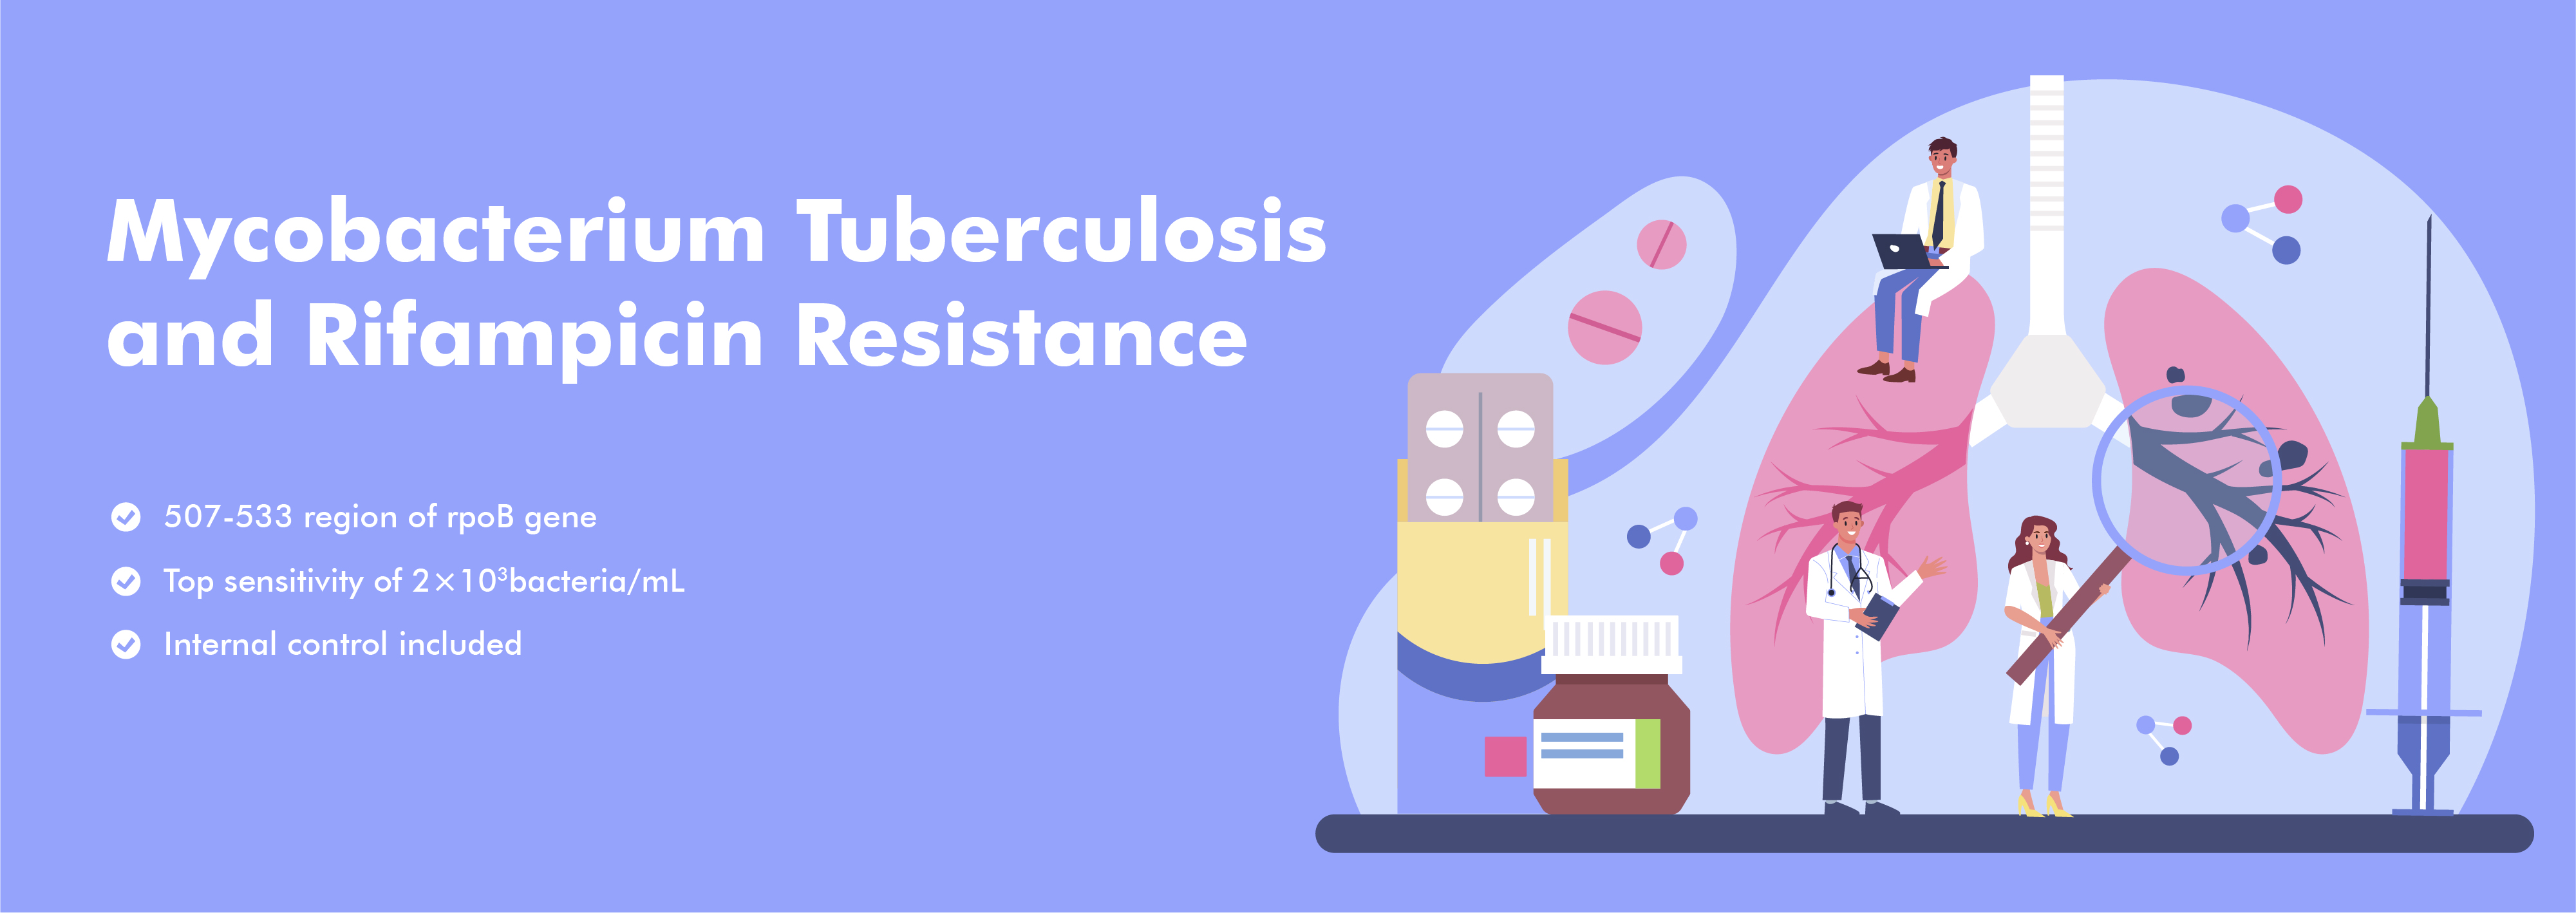 Mycobacterium Tuberculosis Nucleic Acid at Rifampicin Resistance